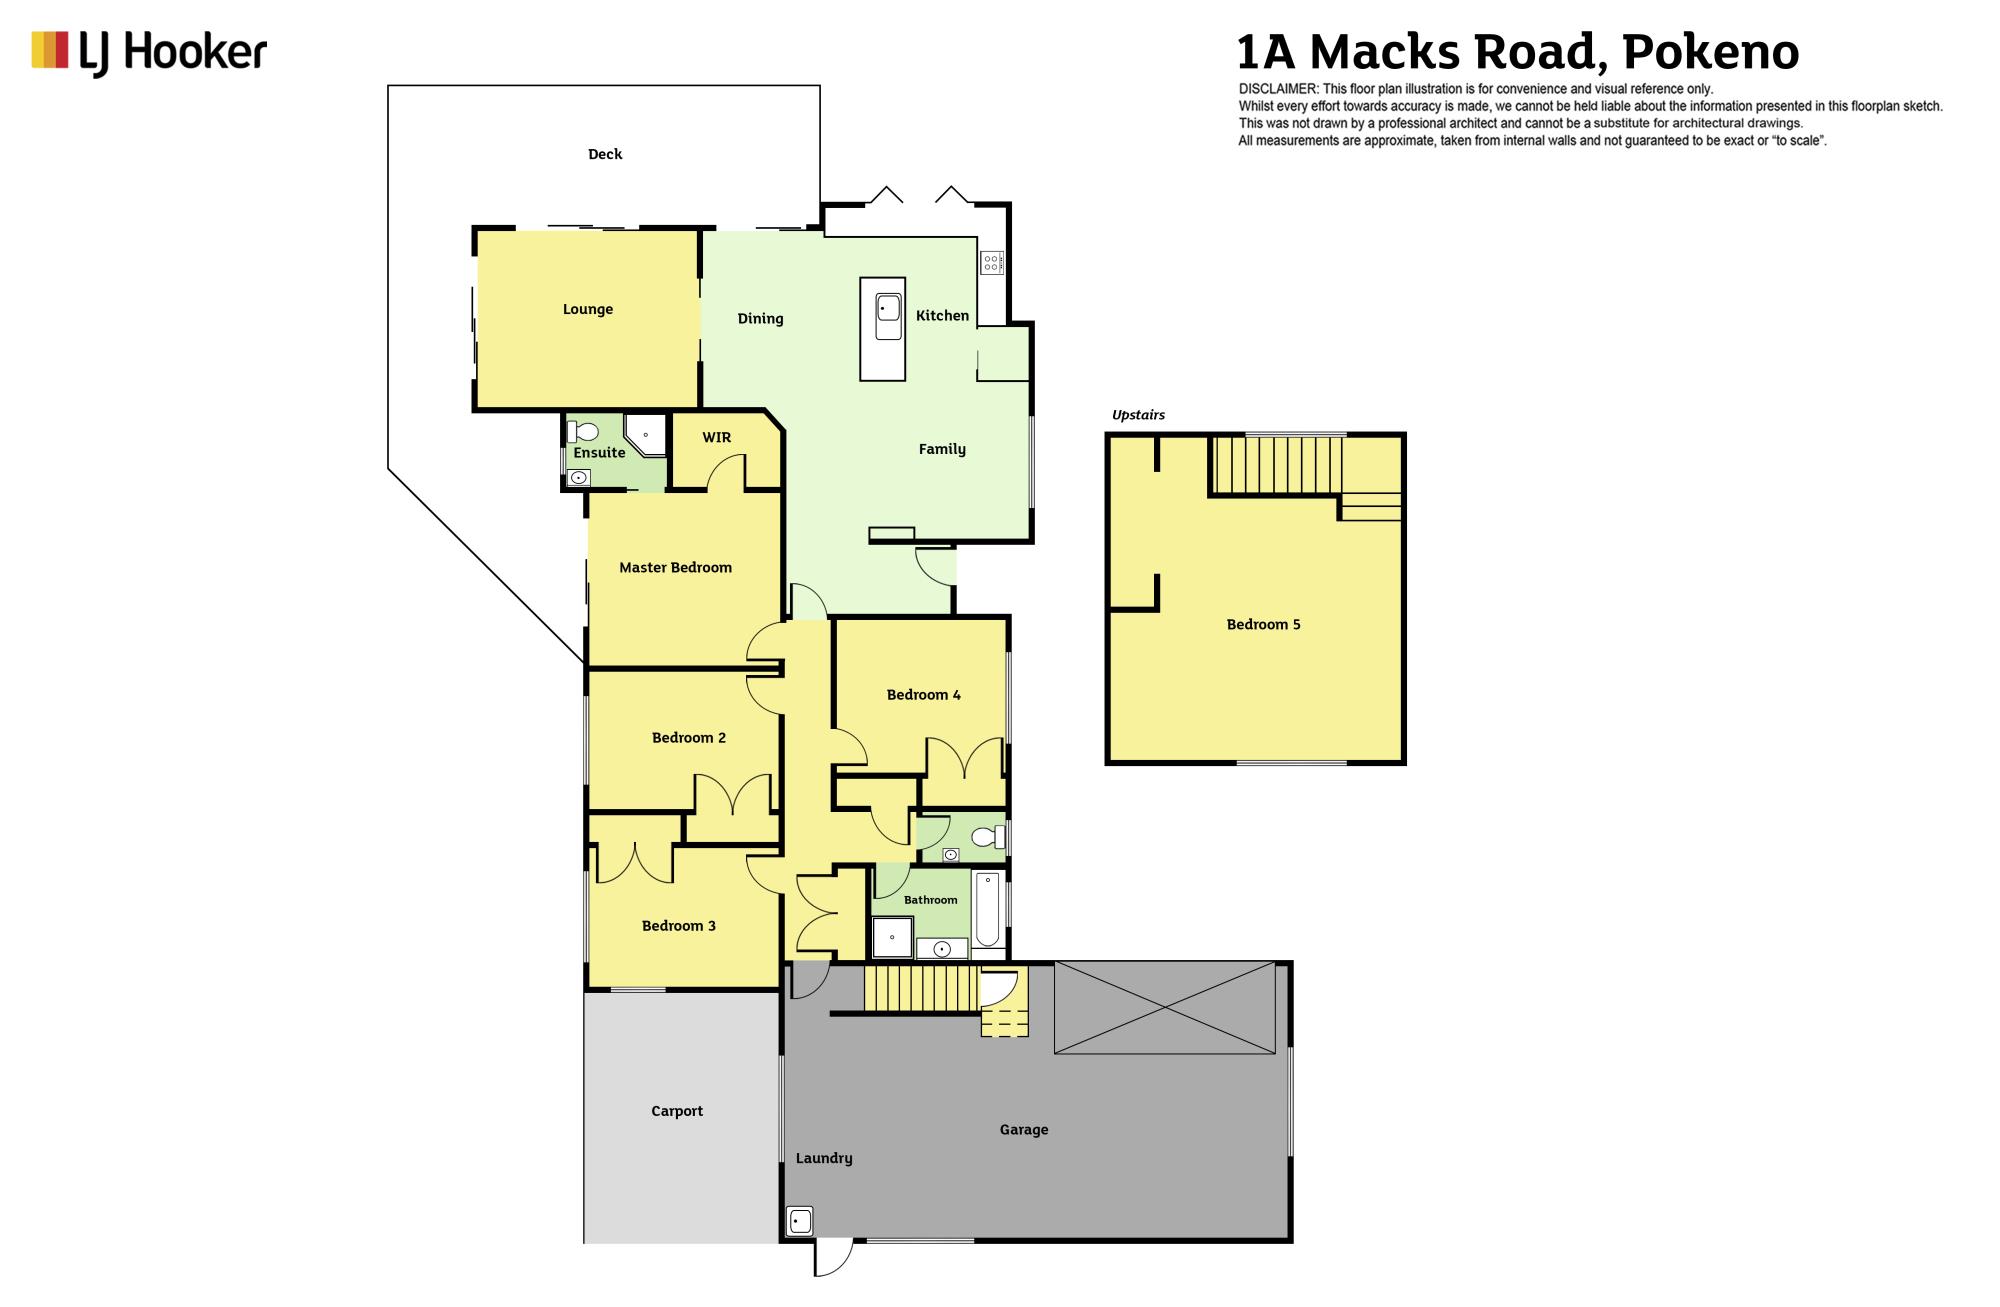 1A Macks Road Pokenoproperty floorplan image